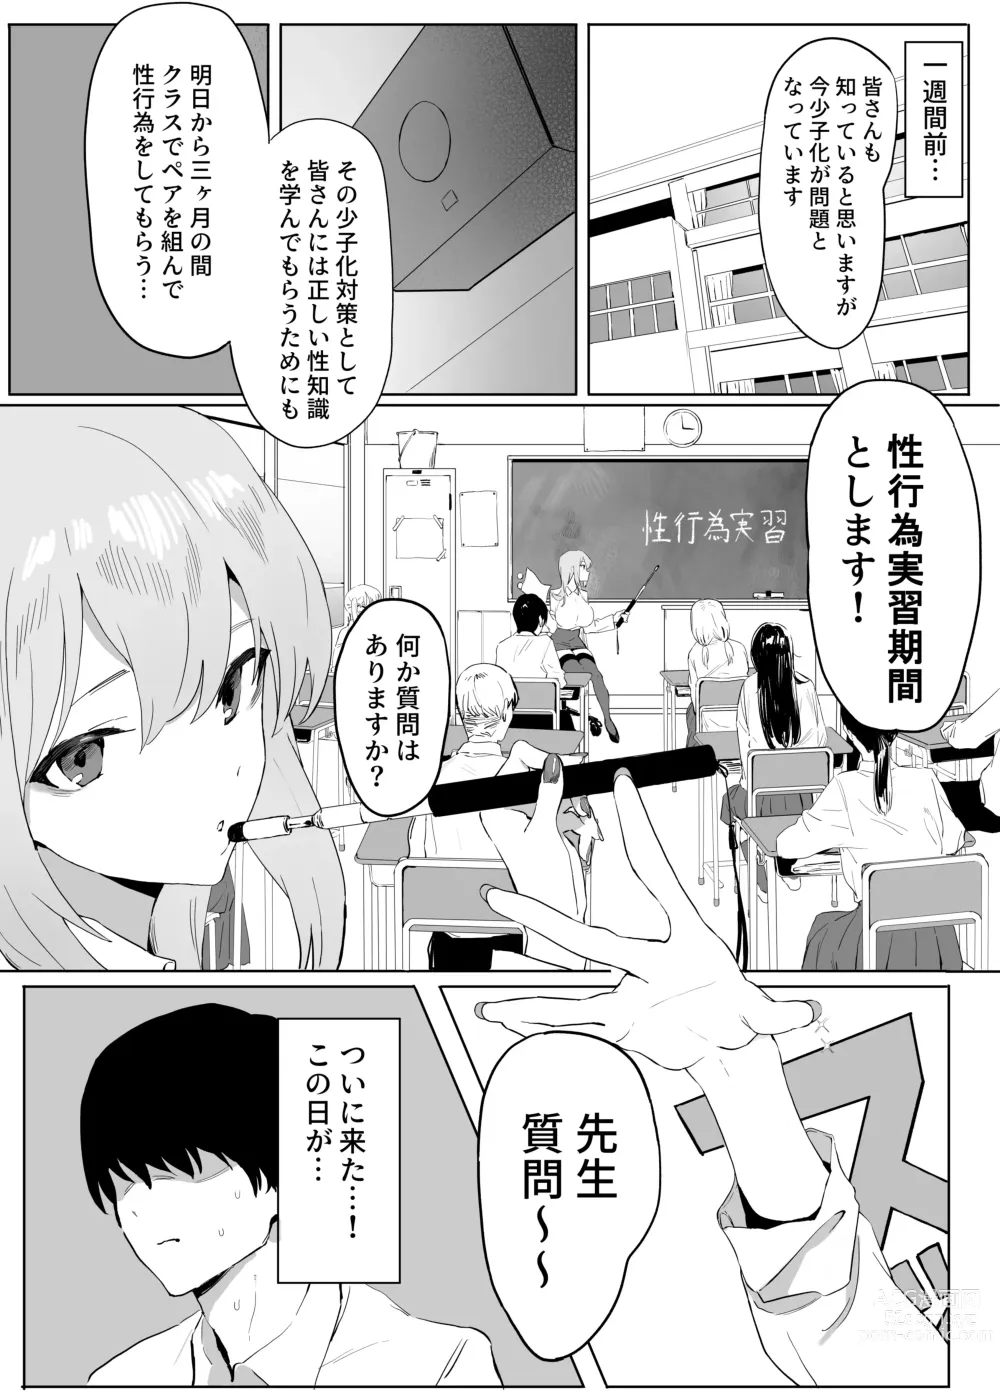 Page 4 of doujinshi Seikoui Jisshuu!